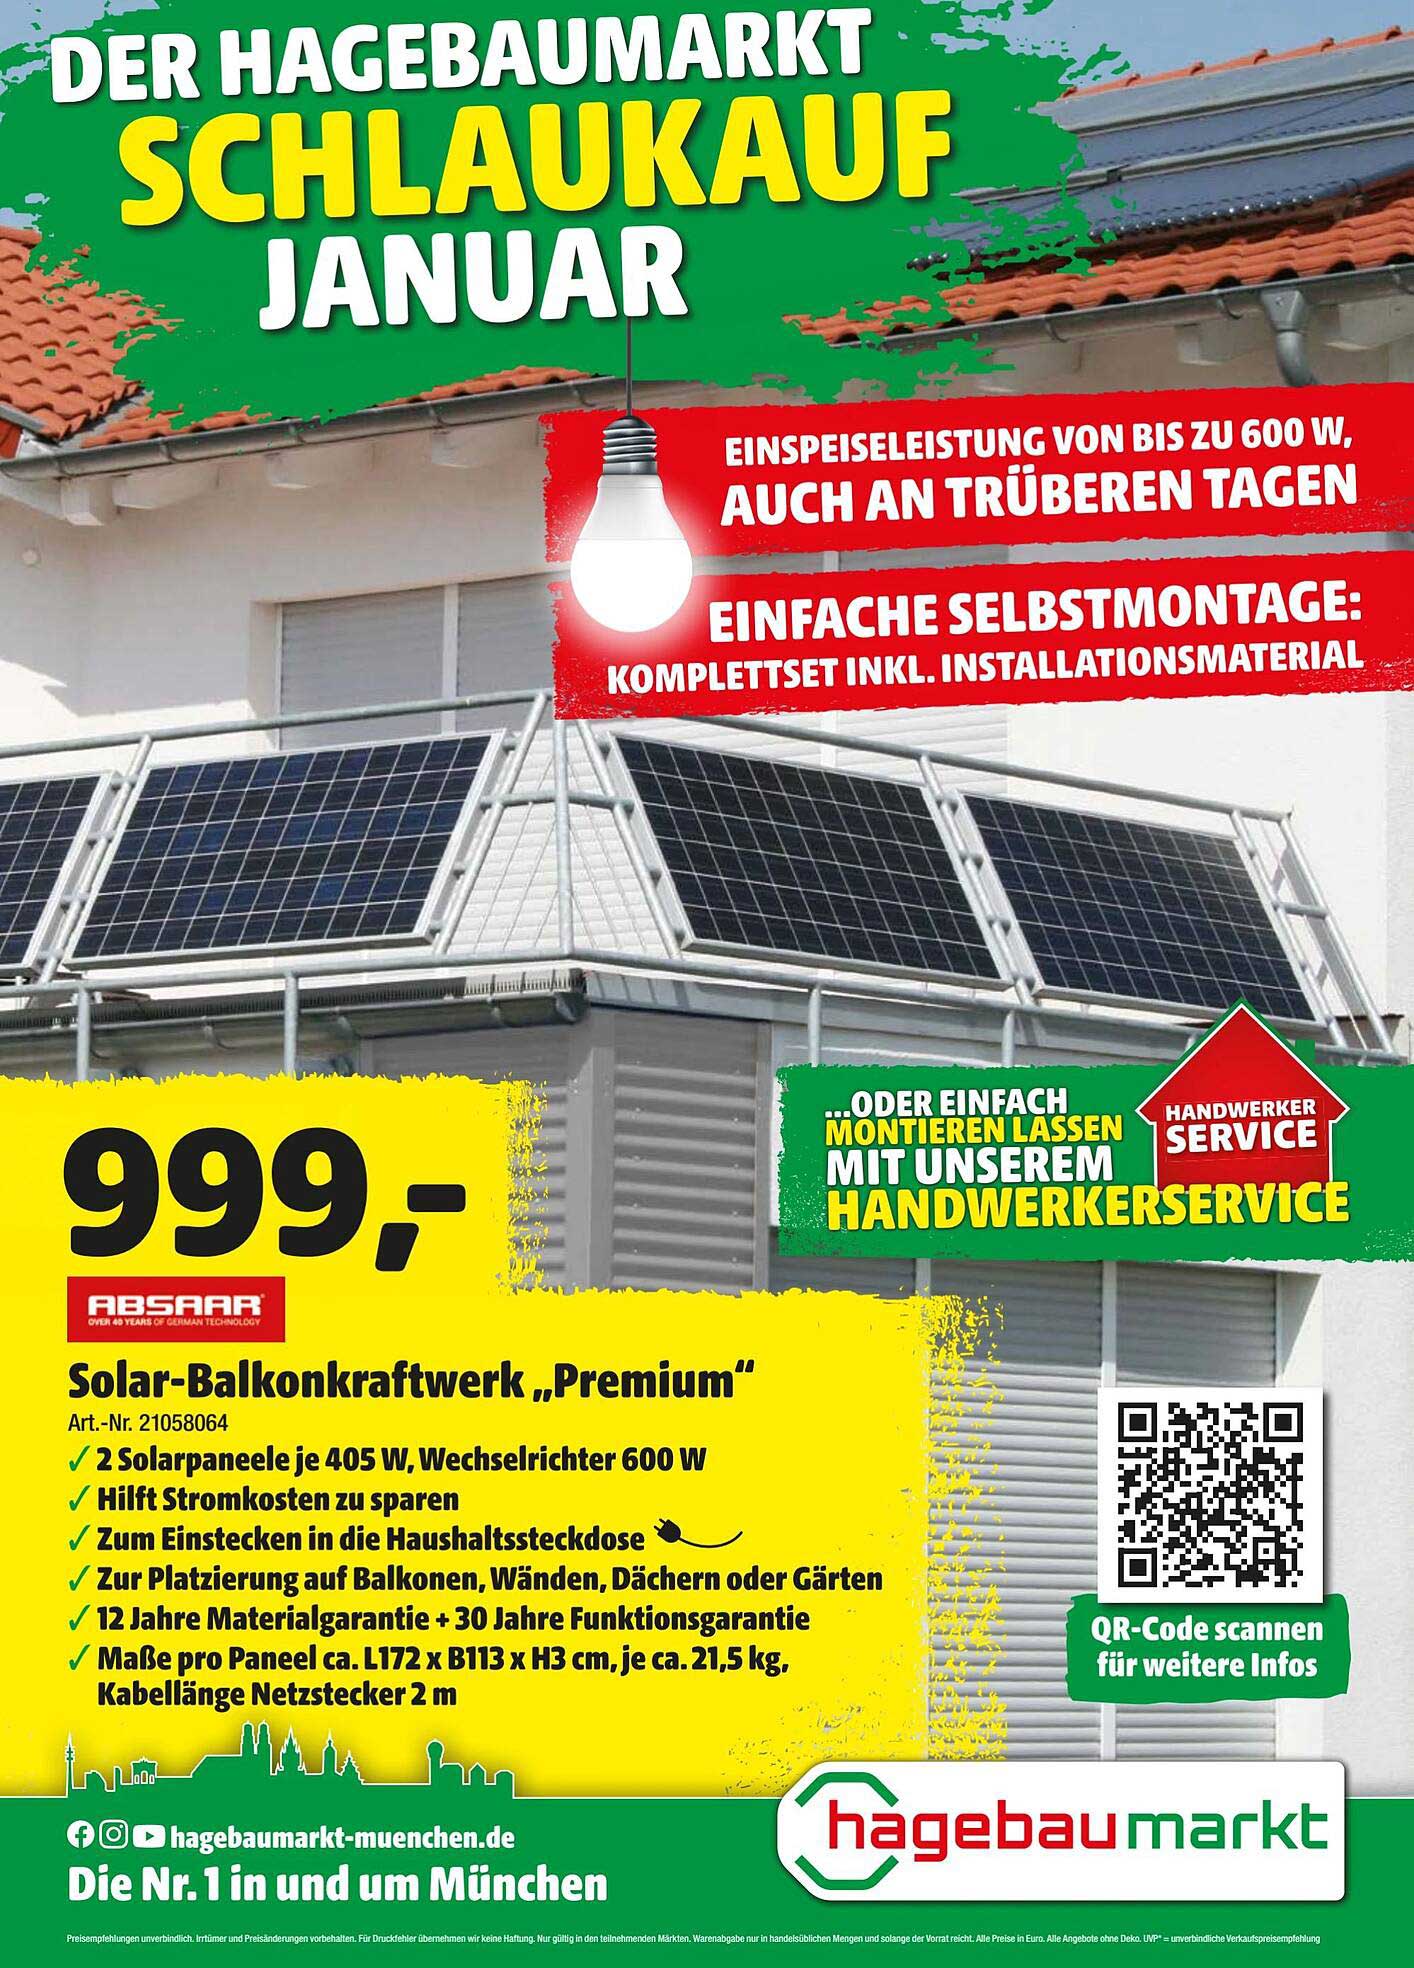 Hagebaumarkt Solar-balkonkraftwerk „premium”